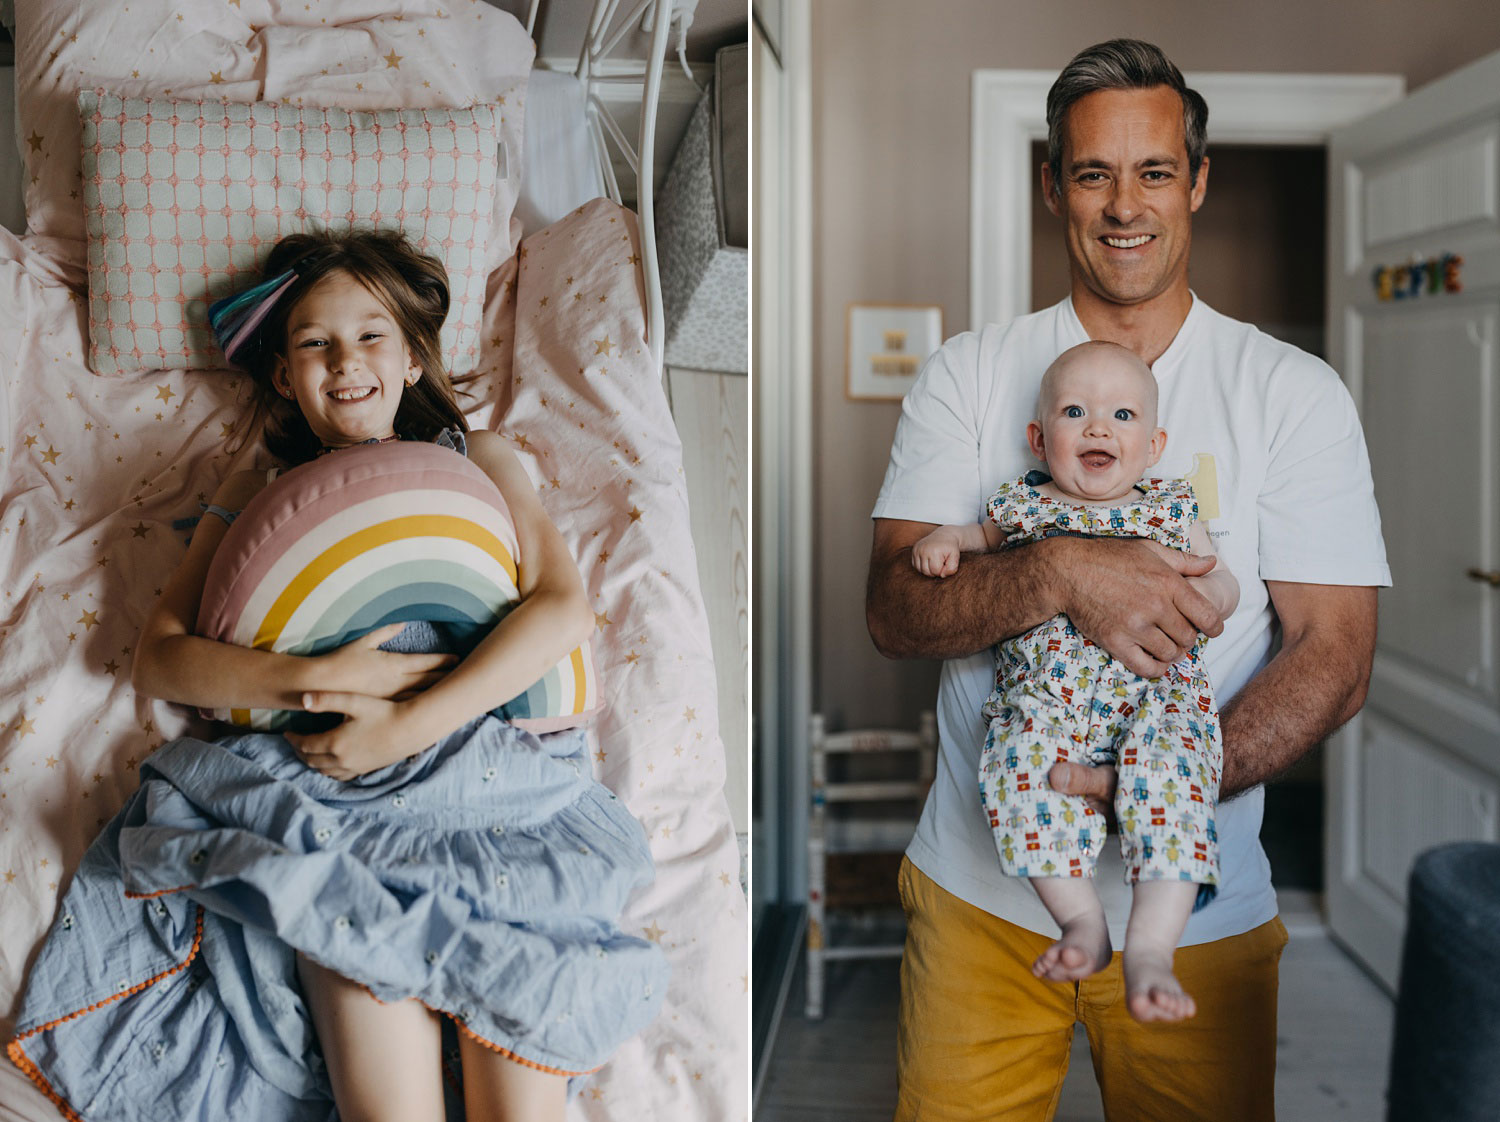 Copenhagen family photographer captures joyful moments at home